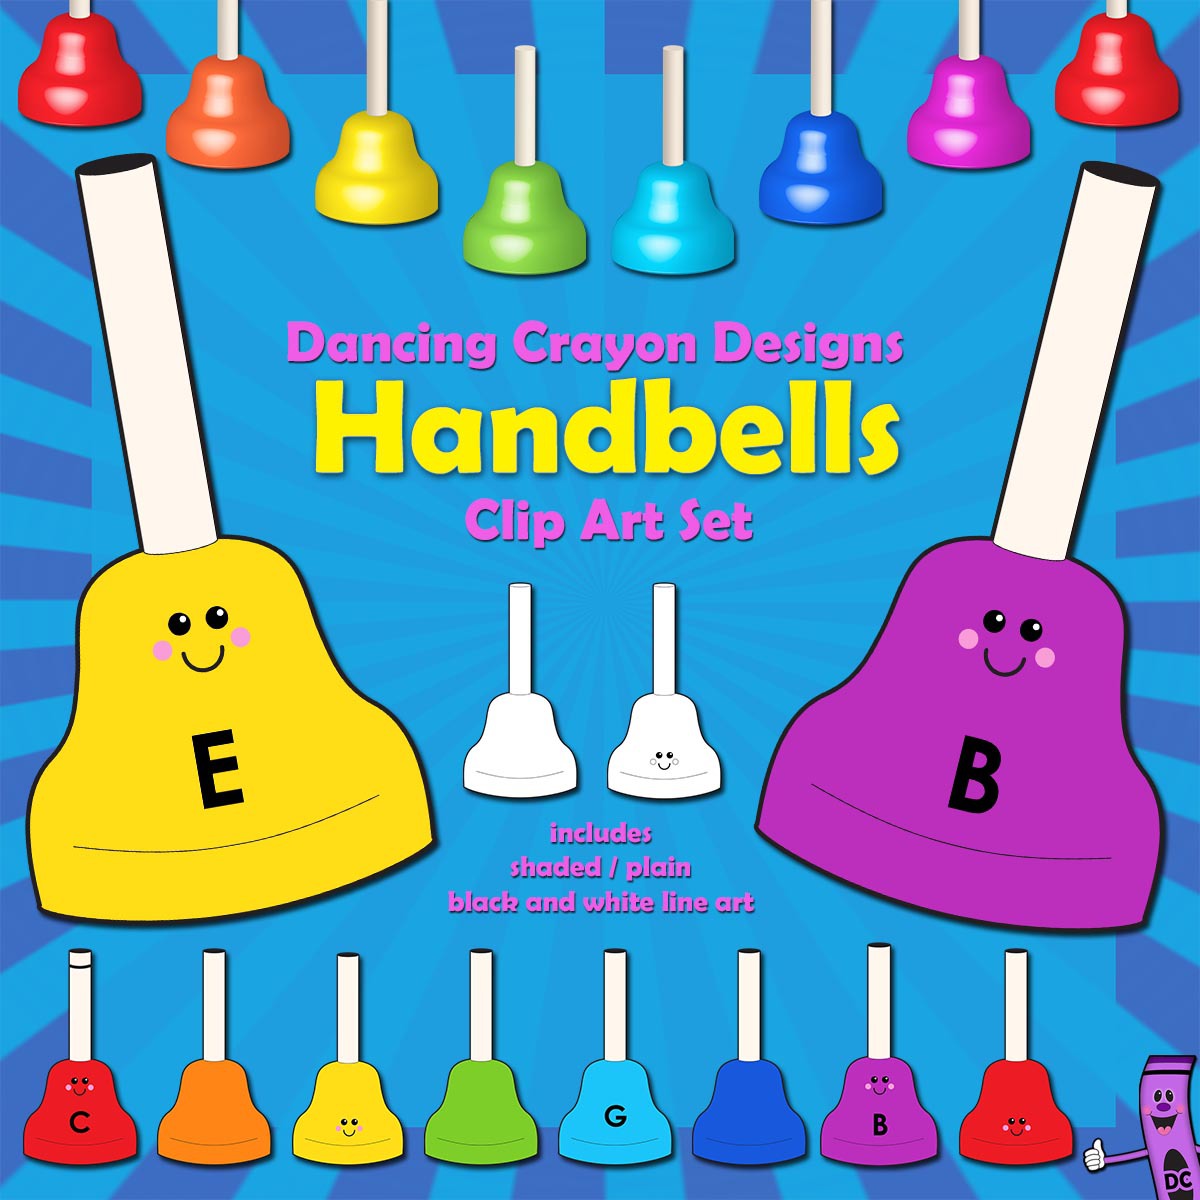 Free Handbell Cliparts, Download Free Handbell Cliparts png images